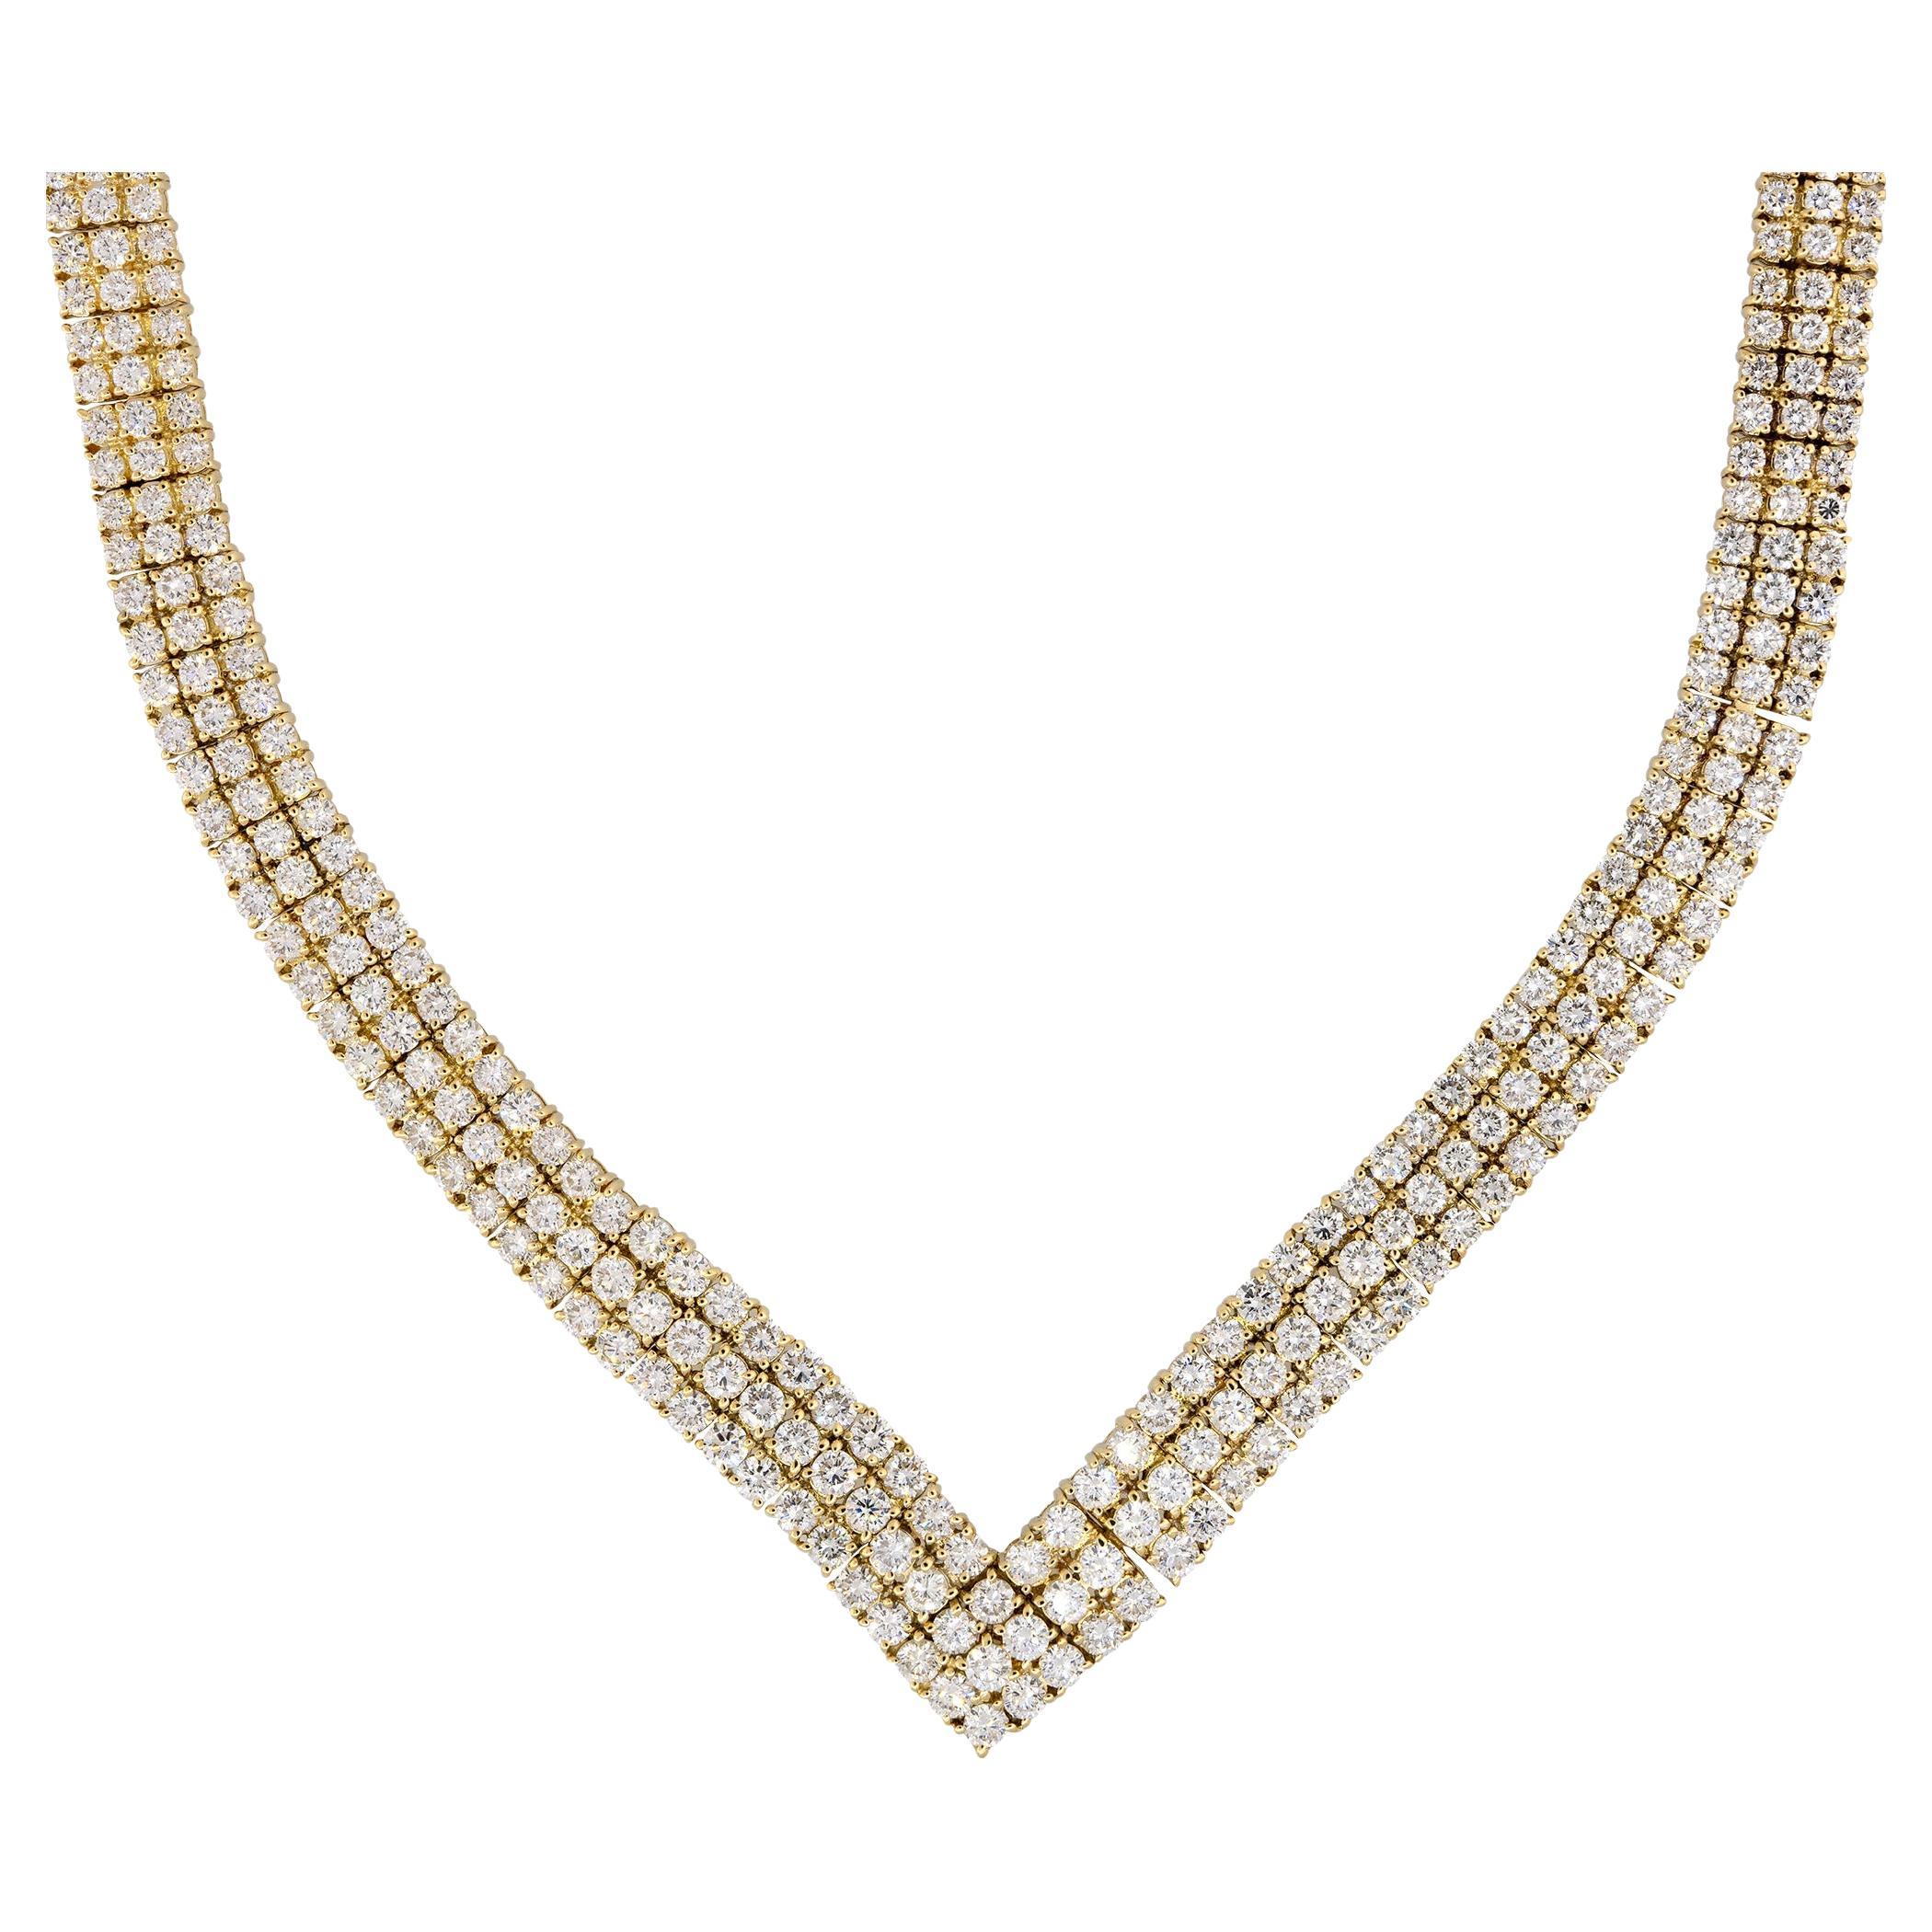 29.5 Carat Round Brilliant Cut Diamond "V" Necklace 18 Karat In Stock For Sale